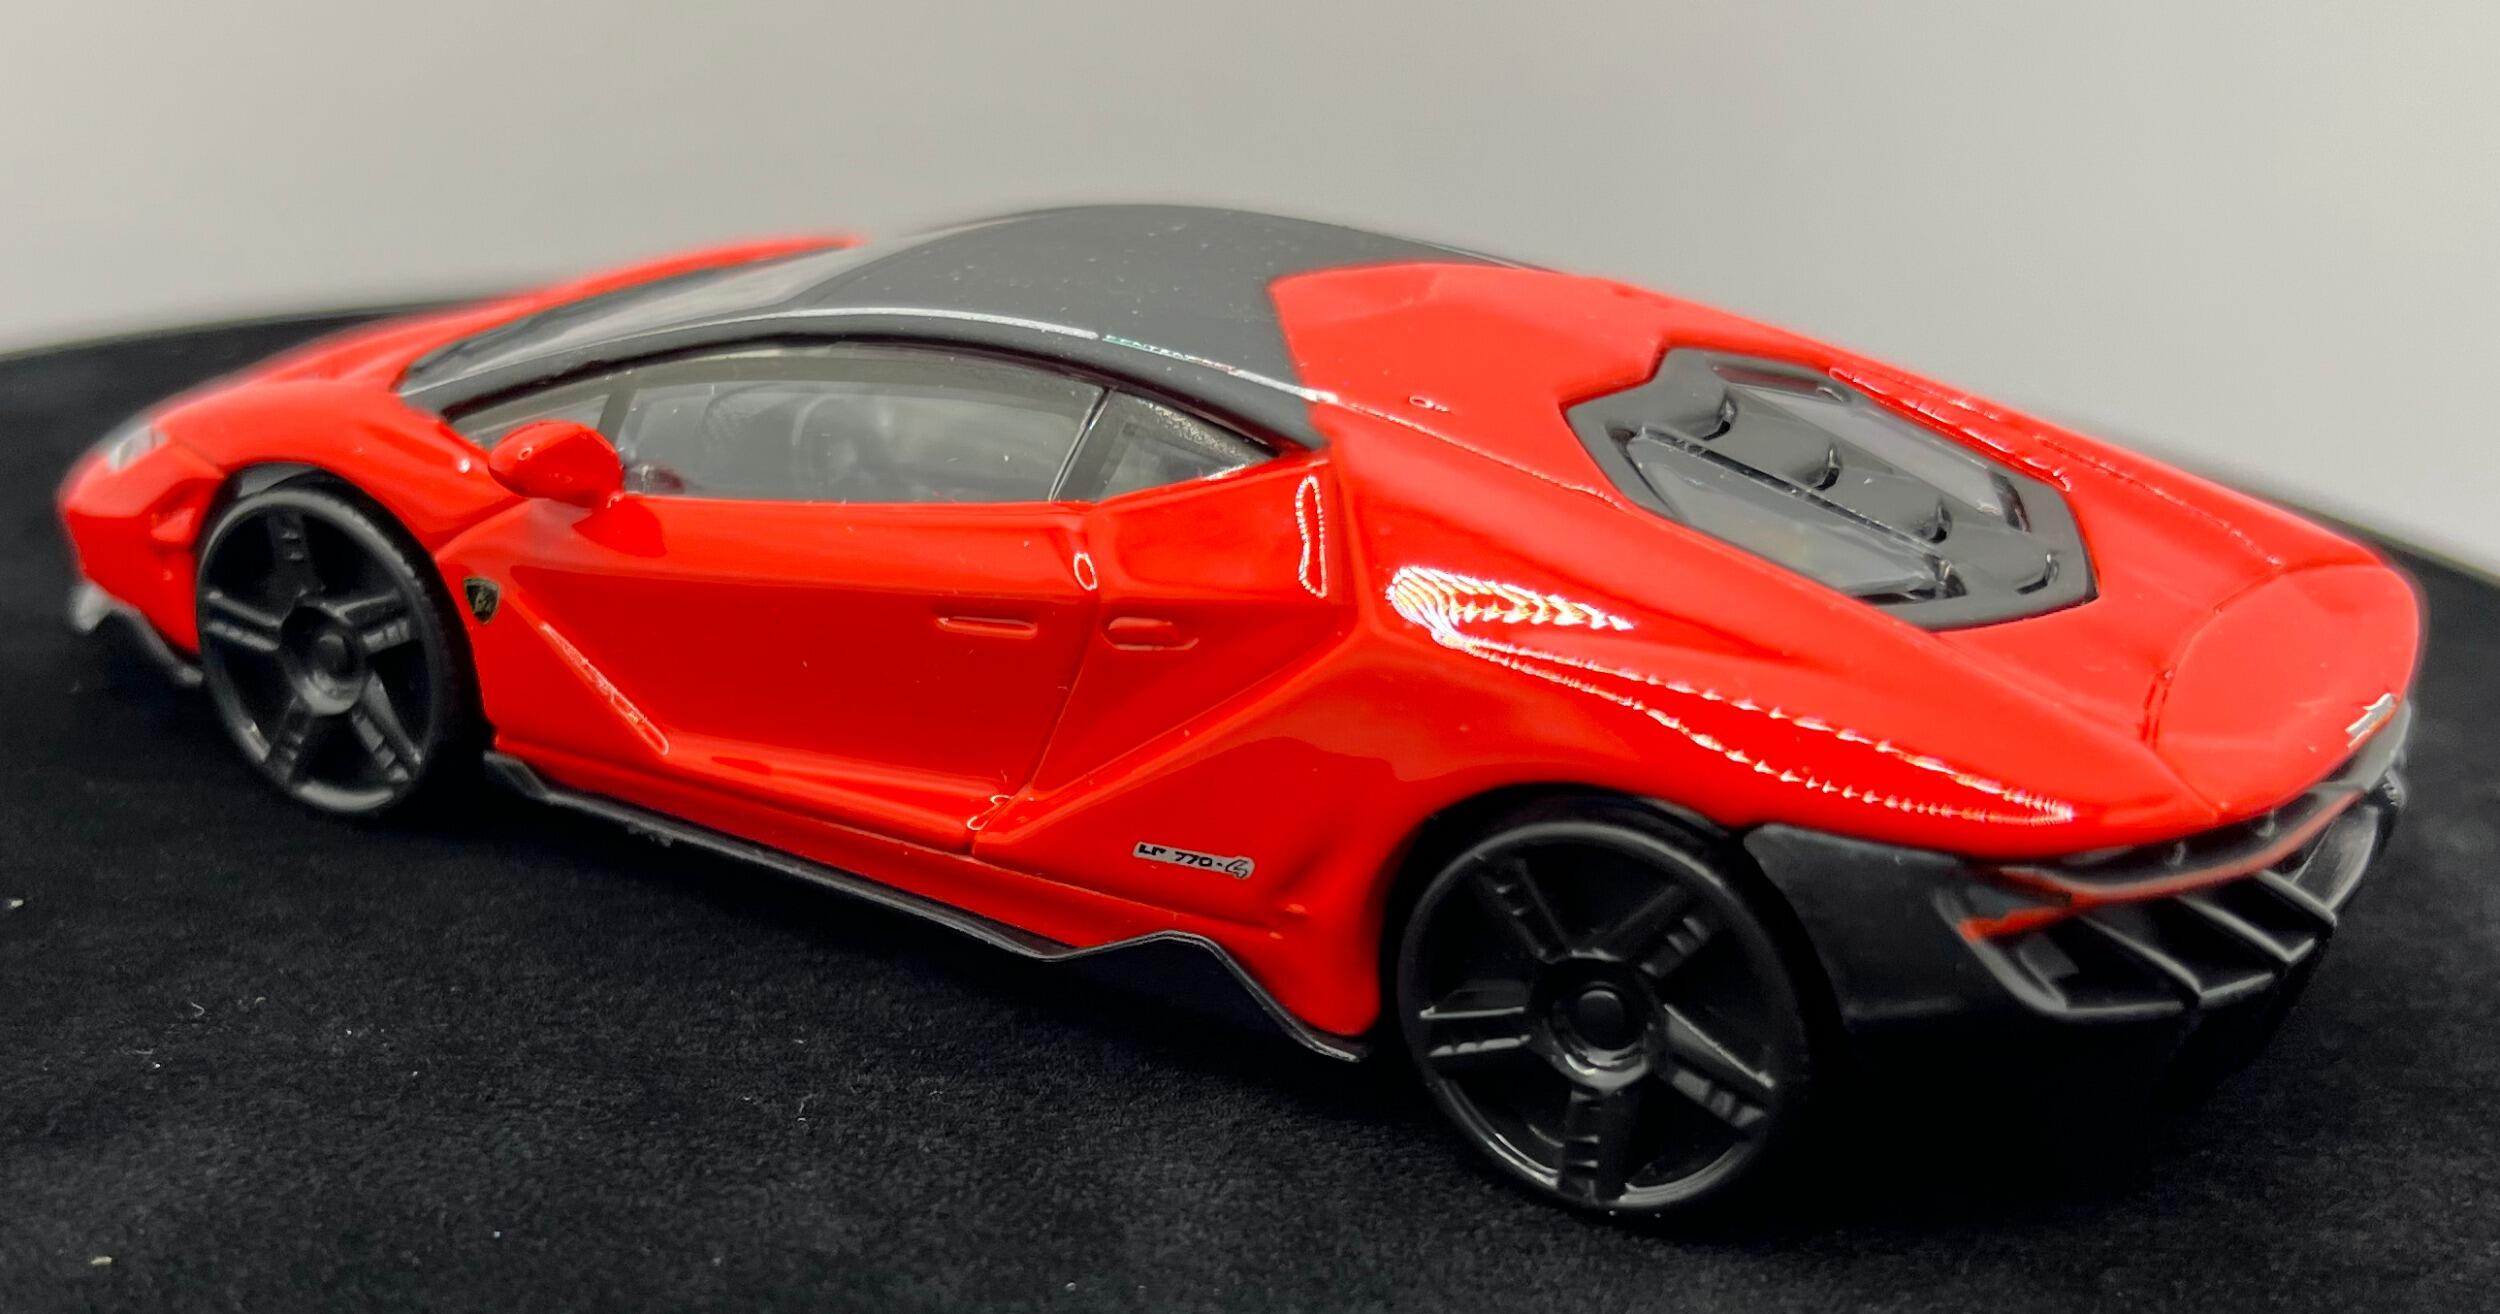 Lamborghini Centenario LP770-4 in Red 2016, 1:43 scale supercar model car from Bburago, 18-30382R